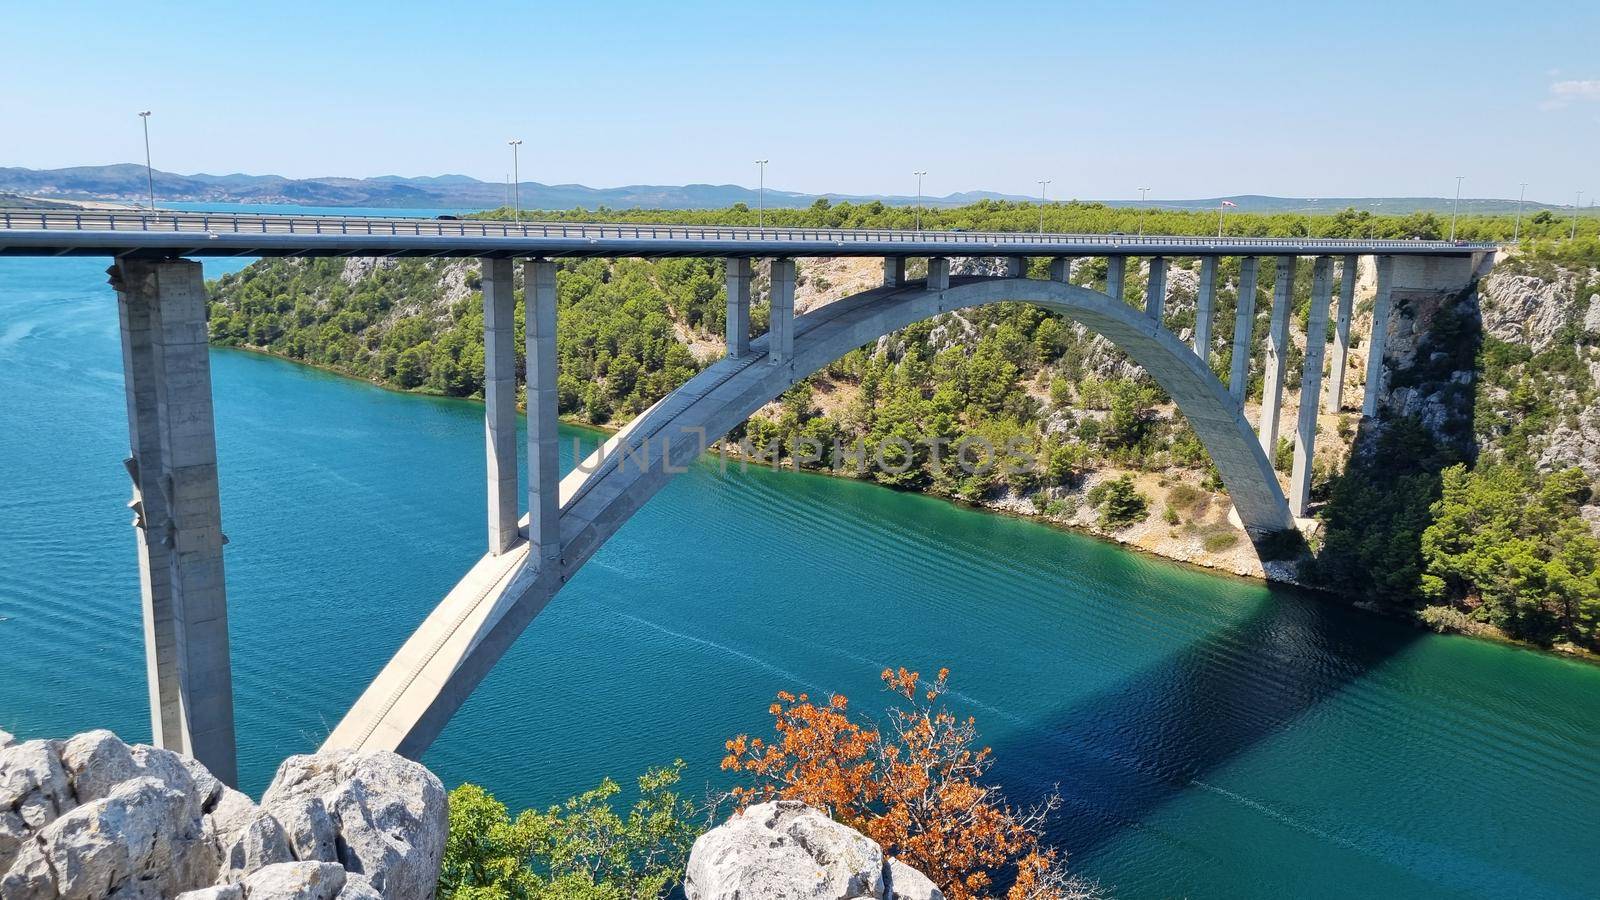 Highway Krka Bridge over the Krka river, town of Skradin in background, Croatia.